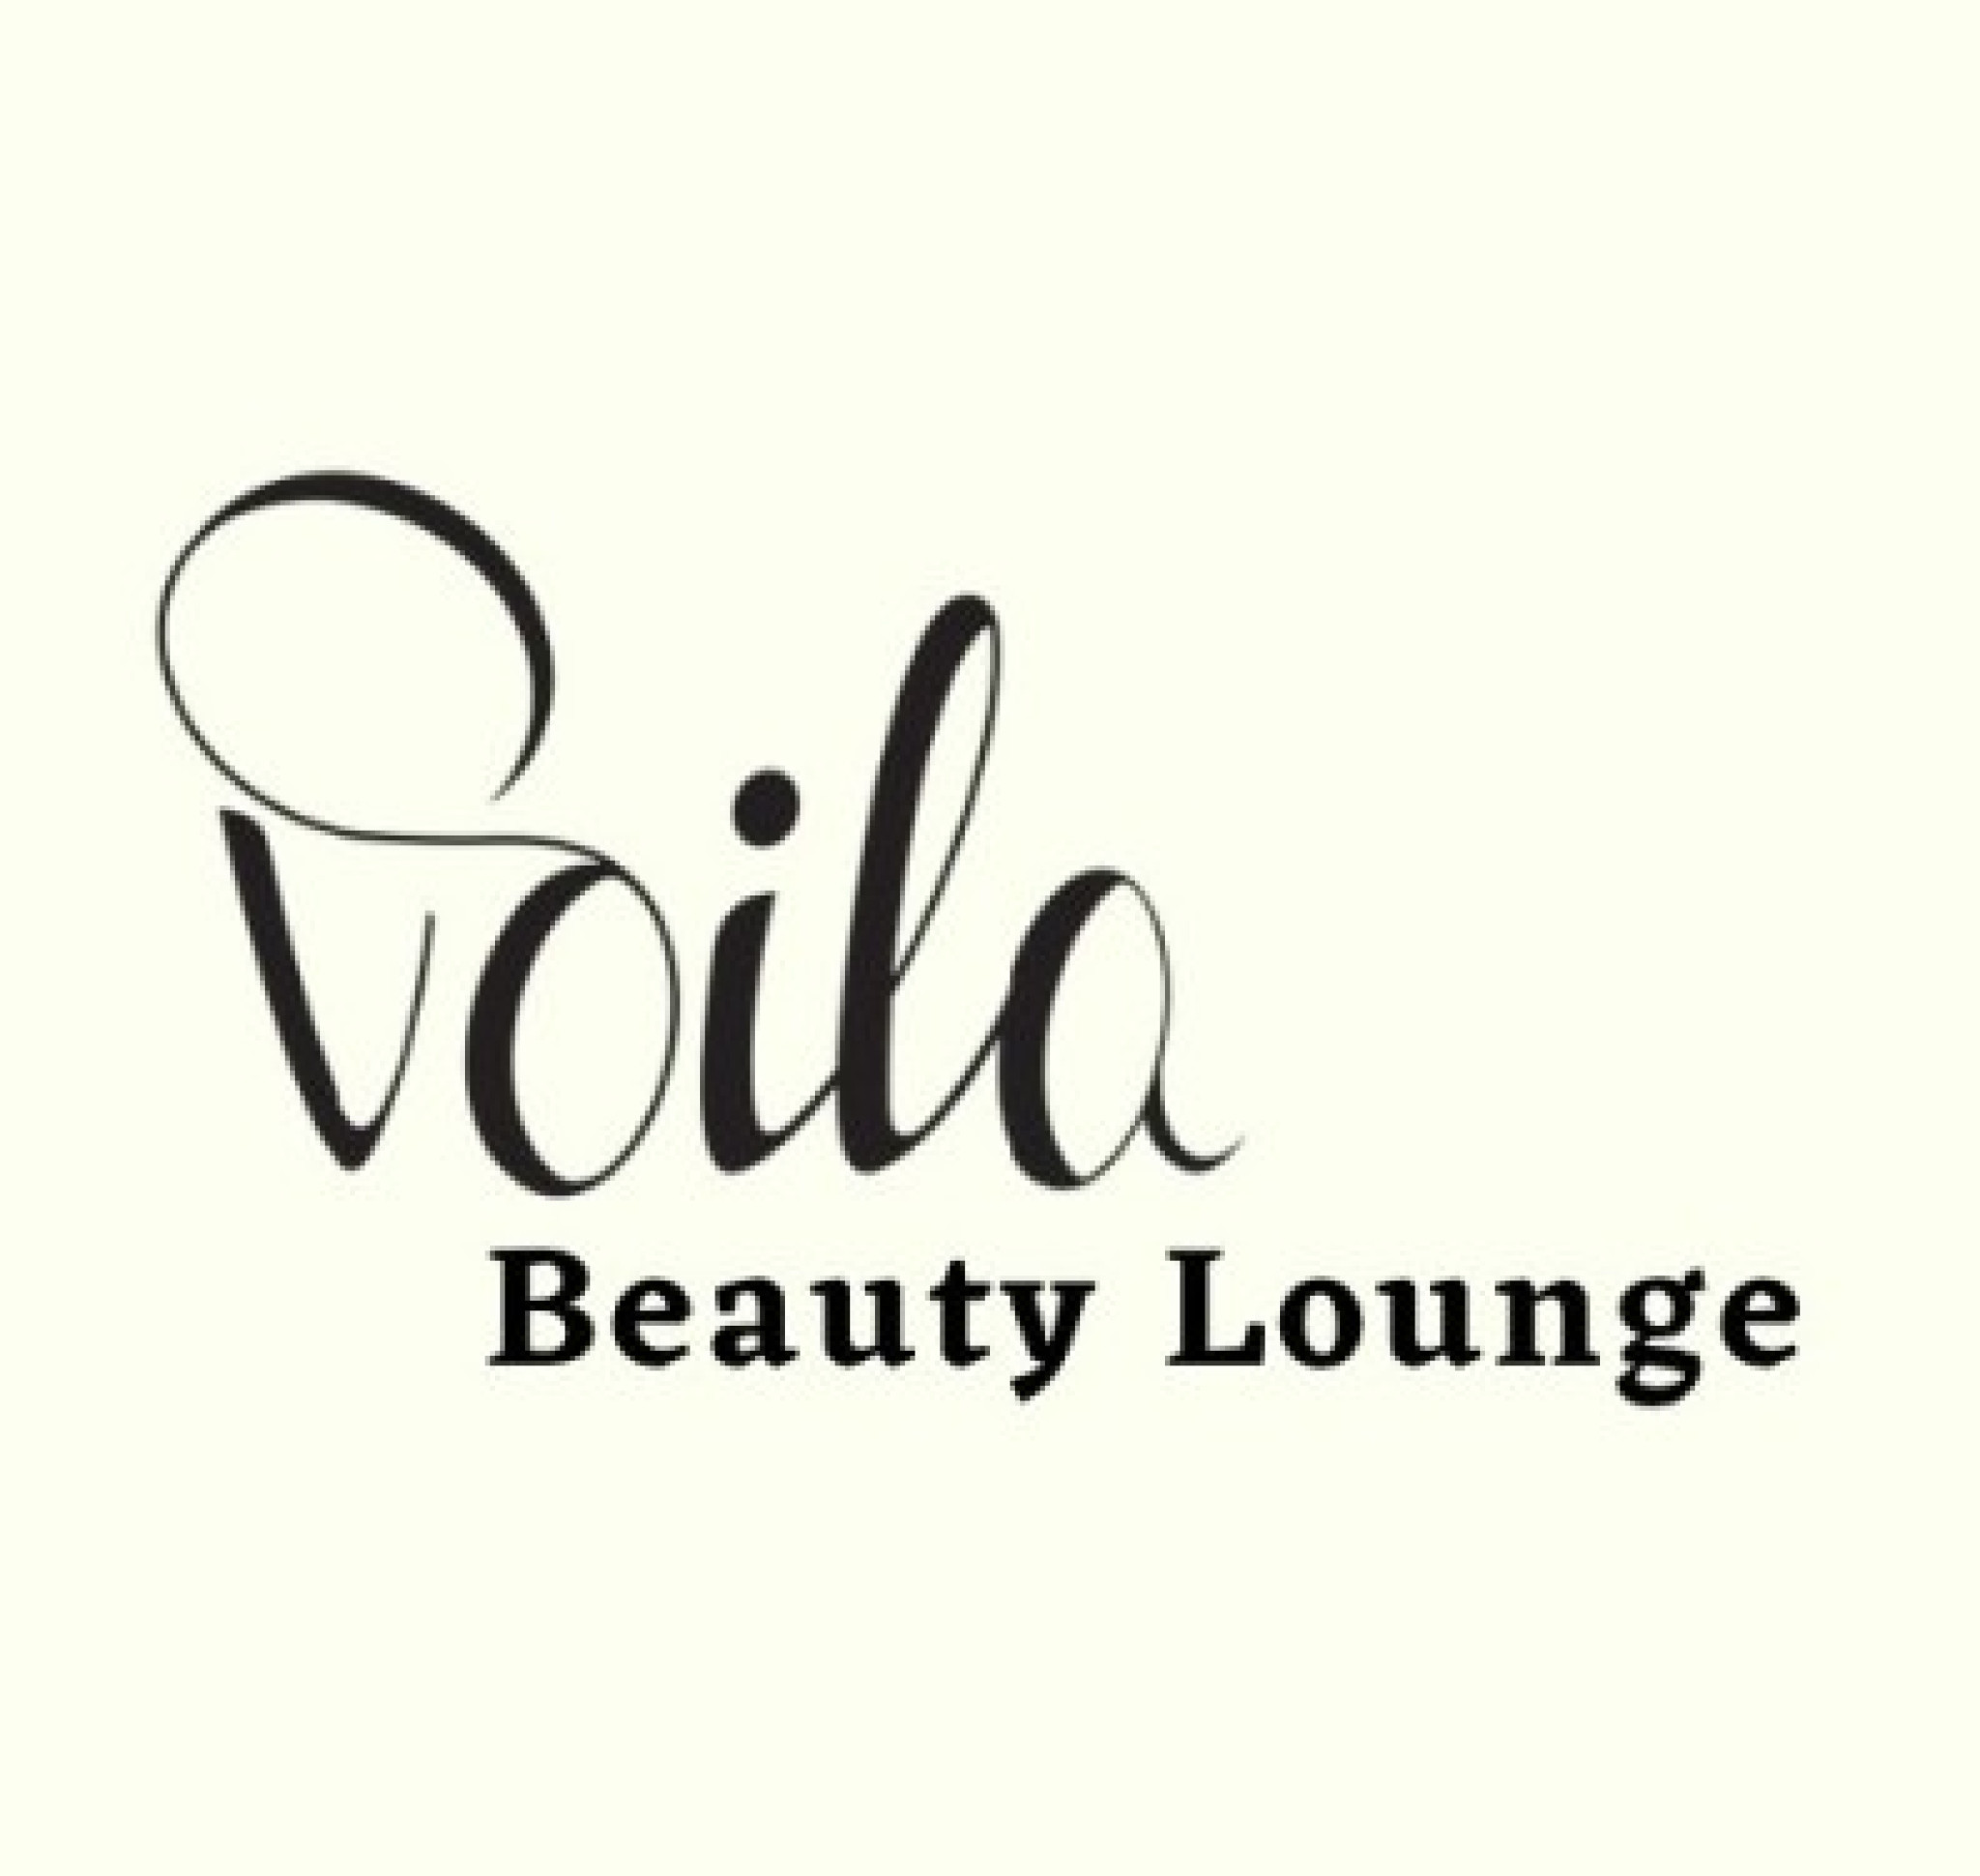 Voila Beauty Lounge